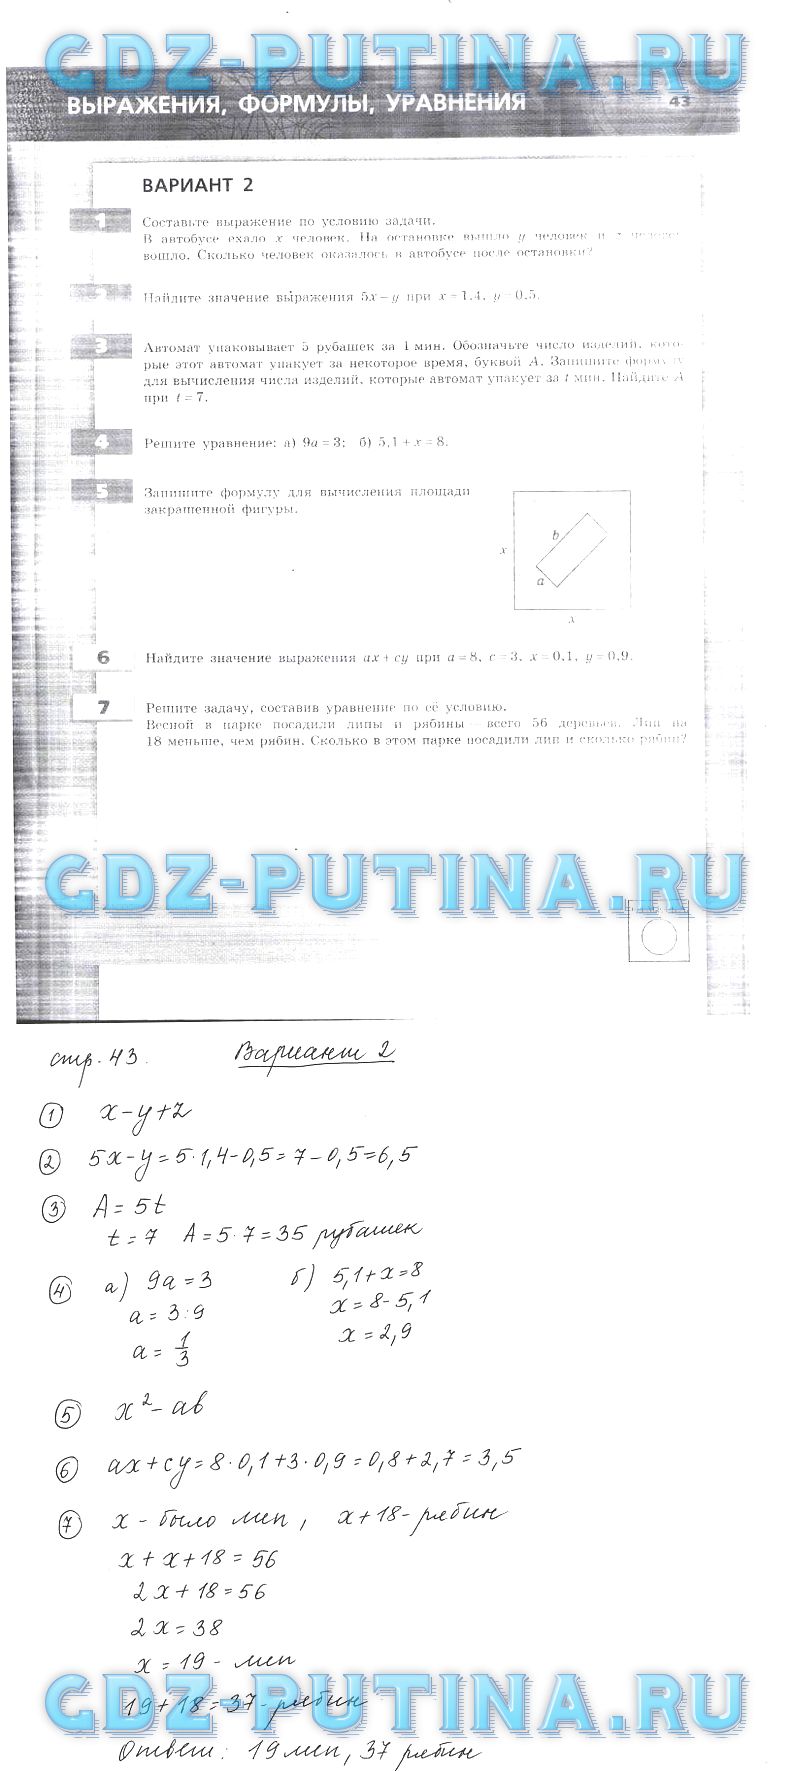 гдз 6 класс тетрадь-экзаменатор страница 43 математика Кузнецова